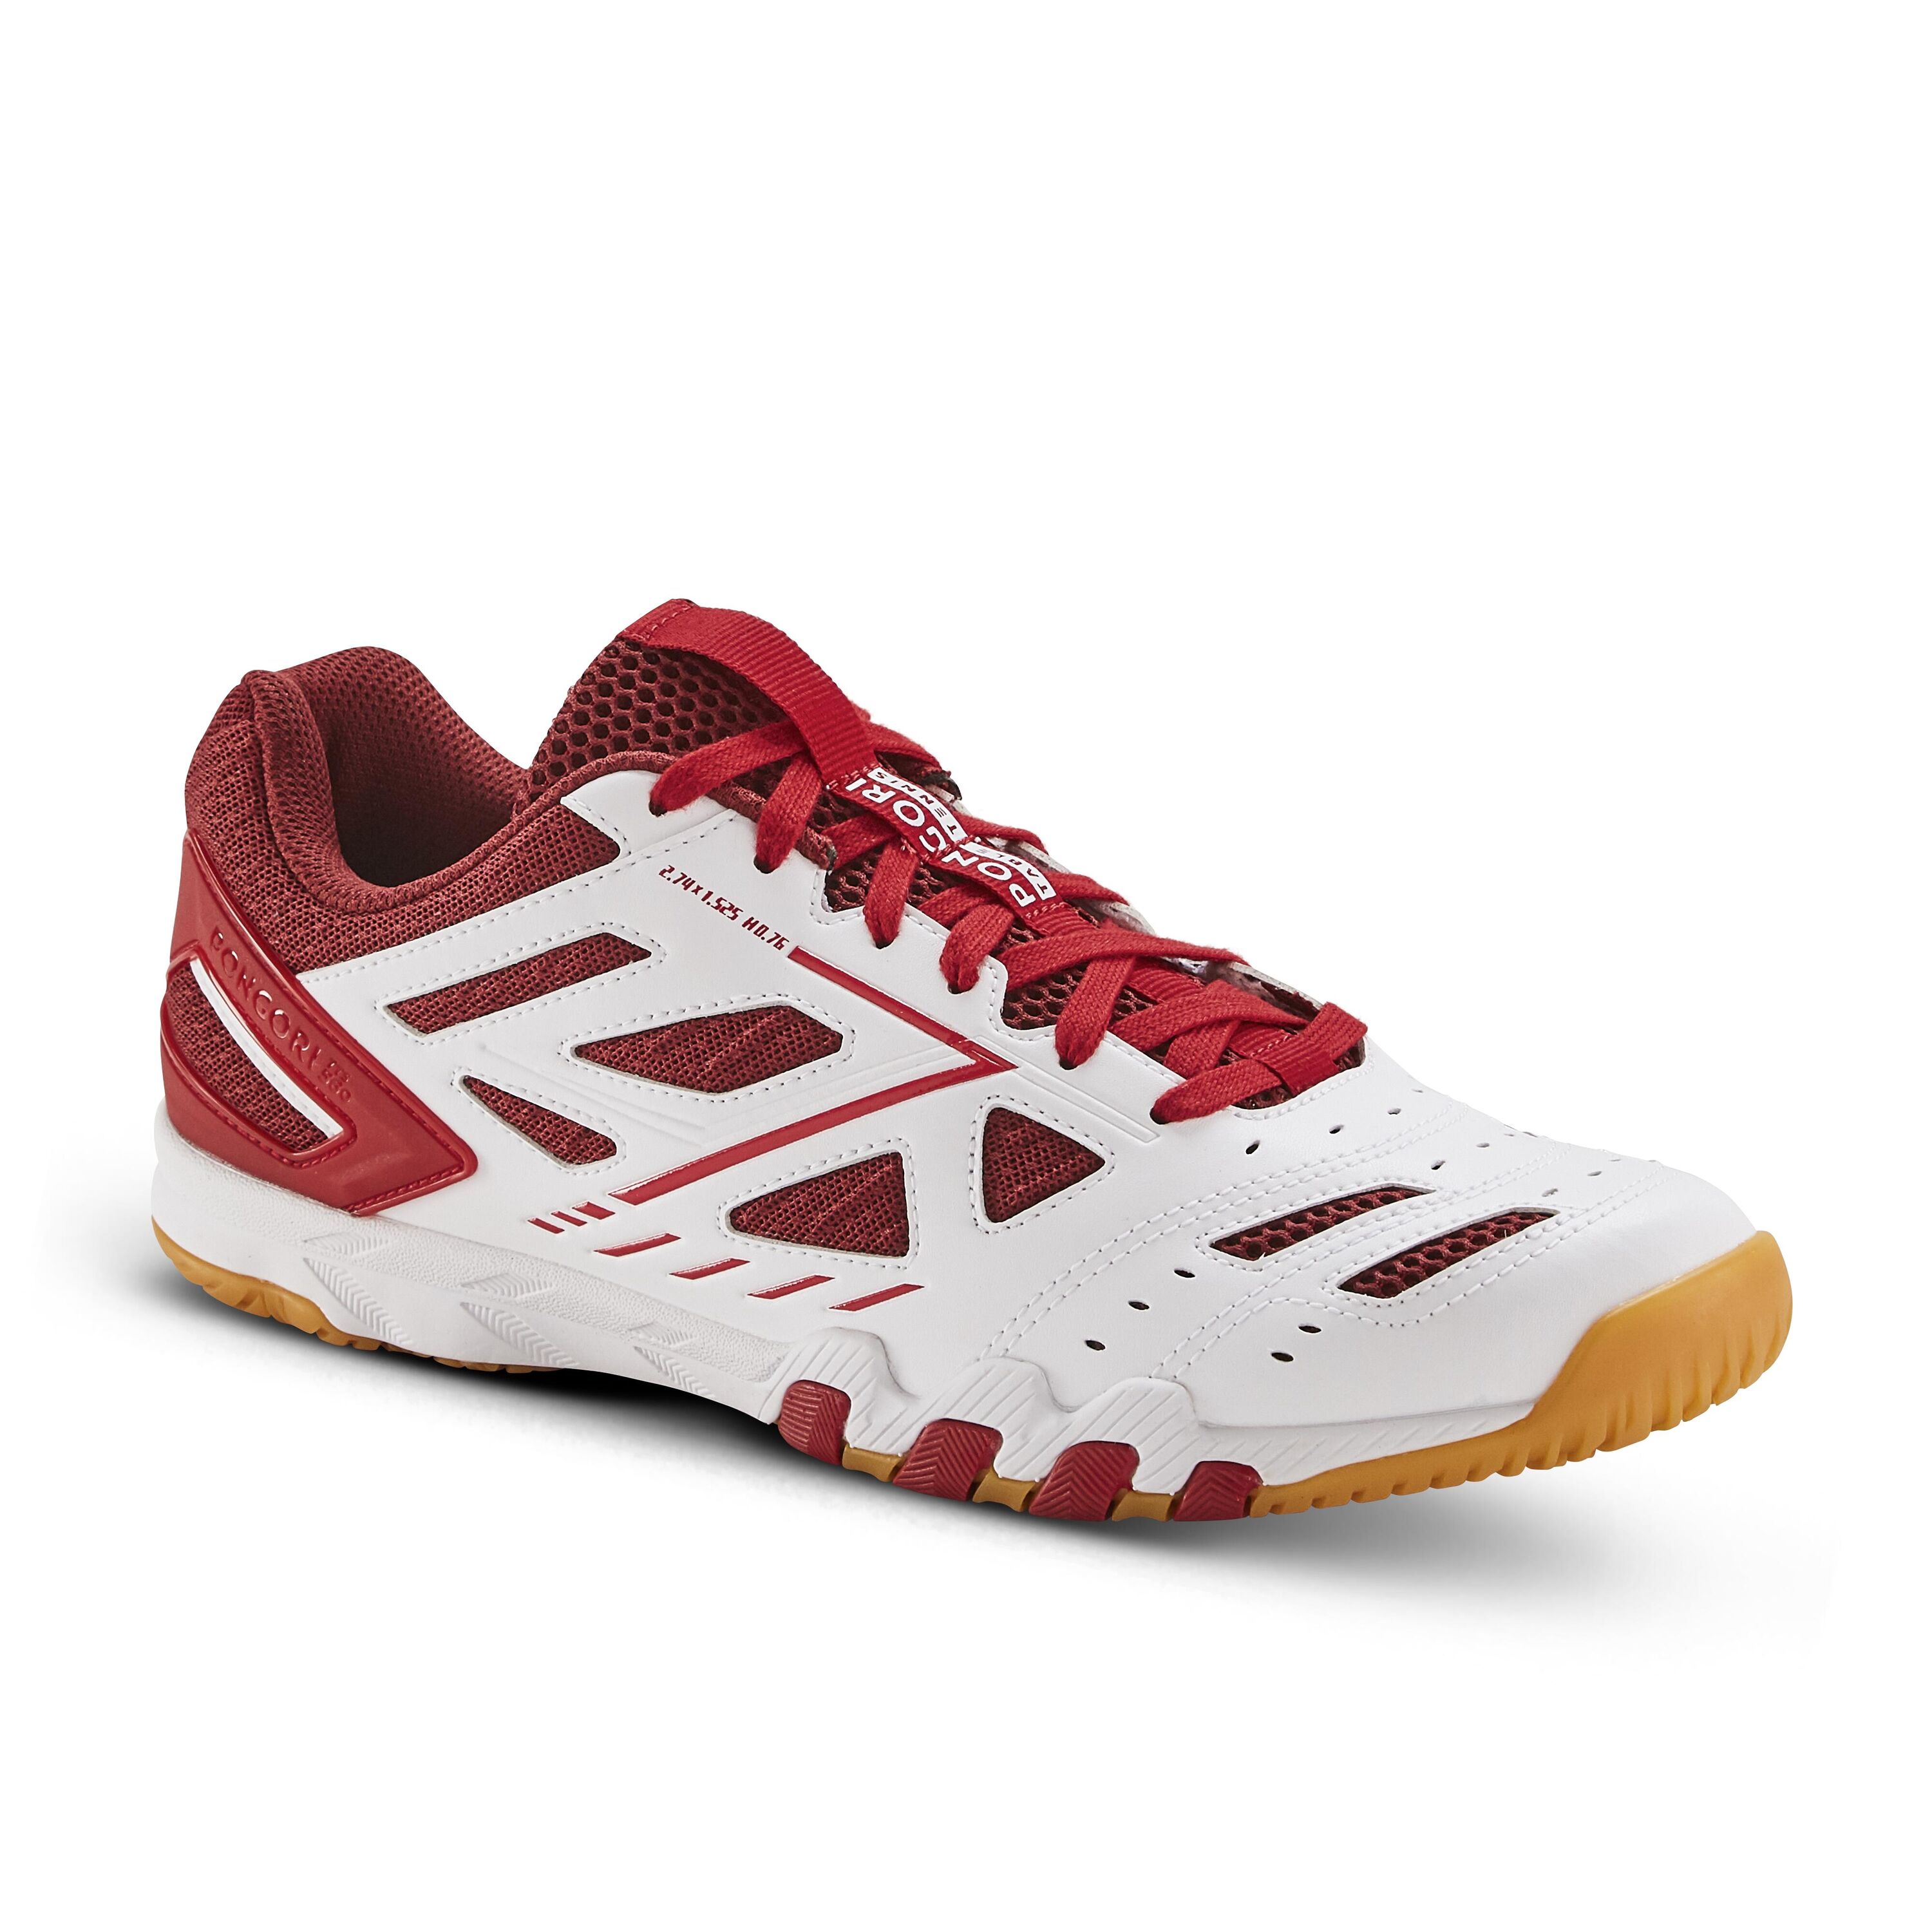 PONGORI Table Tennis Shoes TTS 560 - Red/White